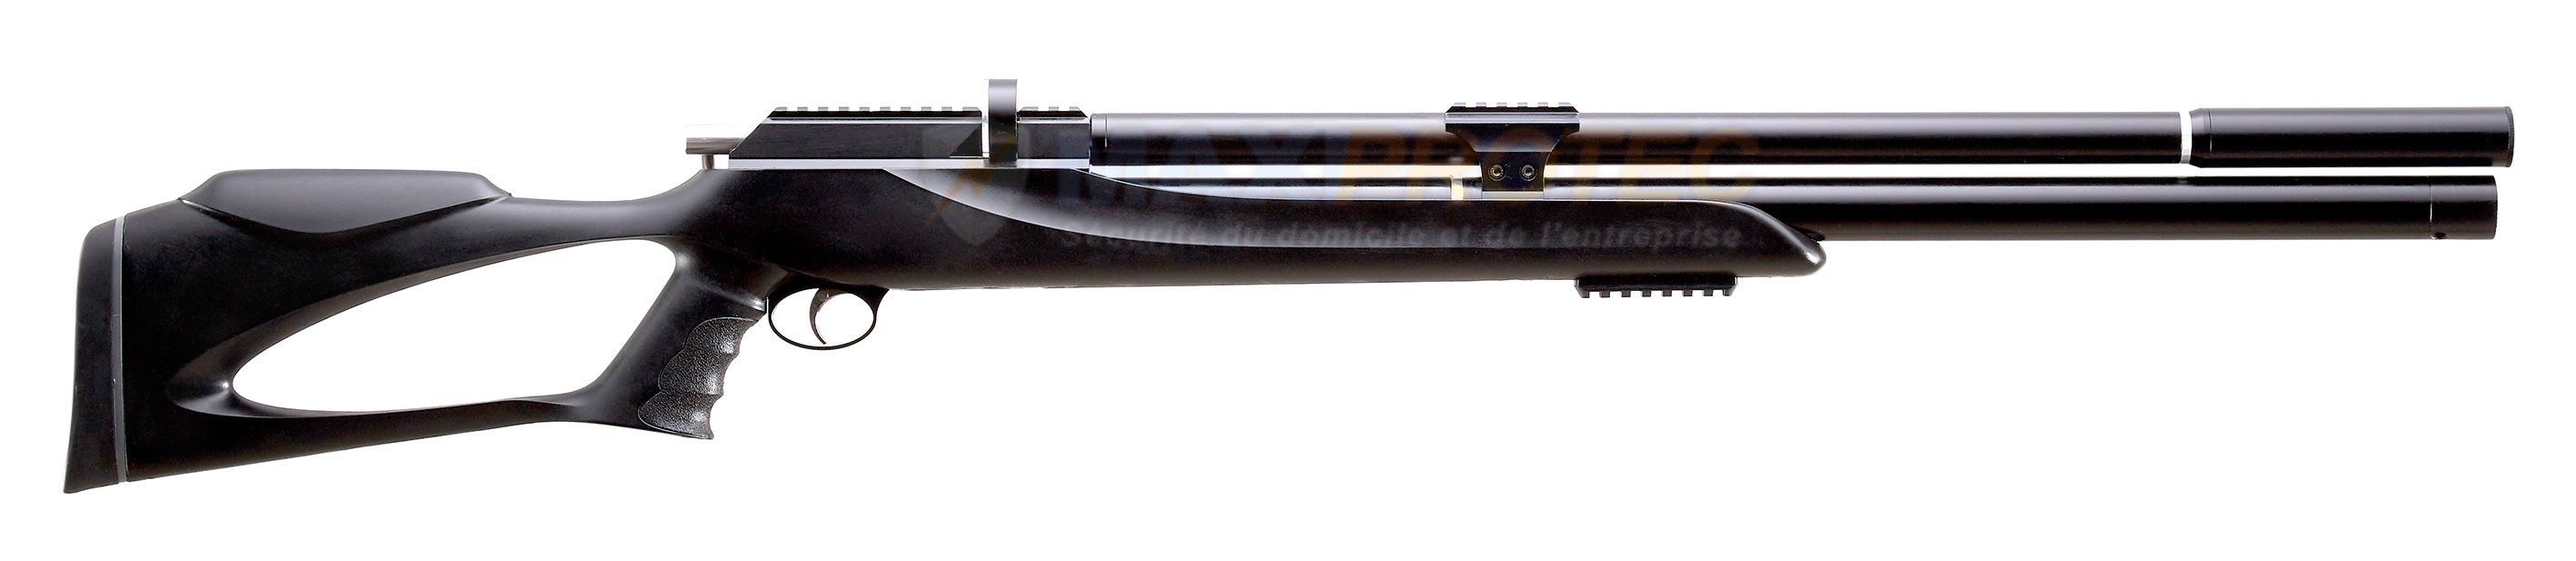 Mechanism of Ekol Viper Revolver